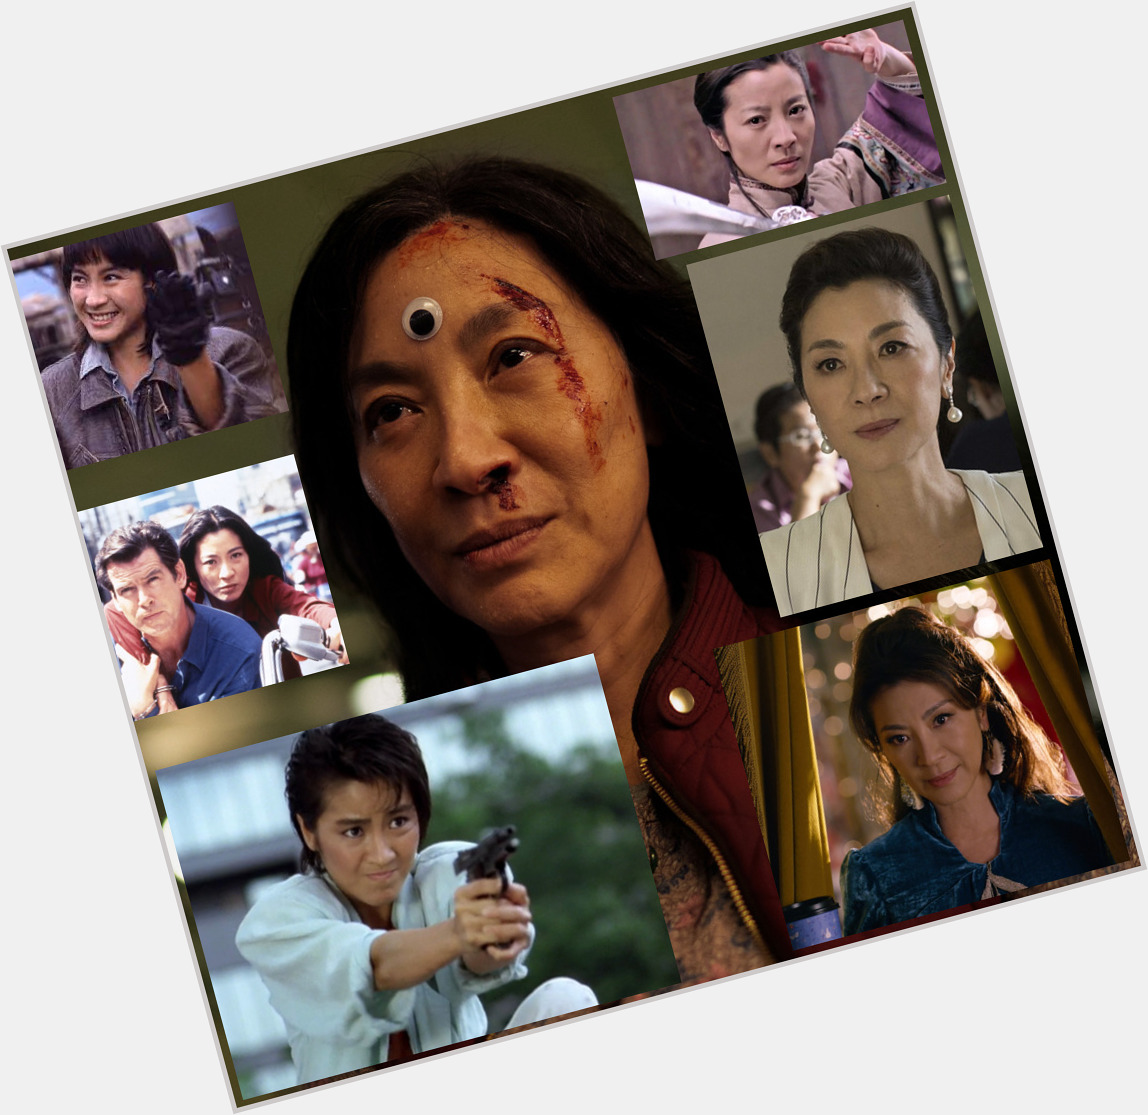 Happy birthday to future Oscar winner Michelle Yeoh!  